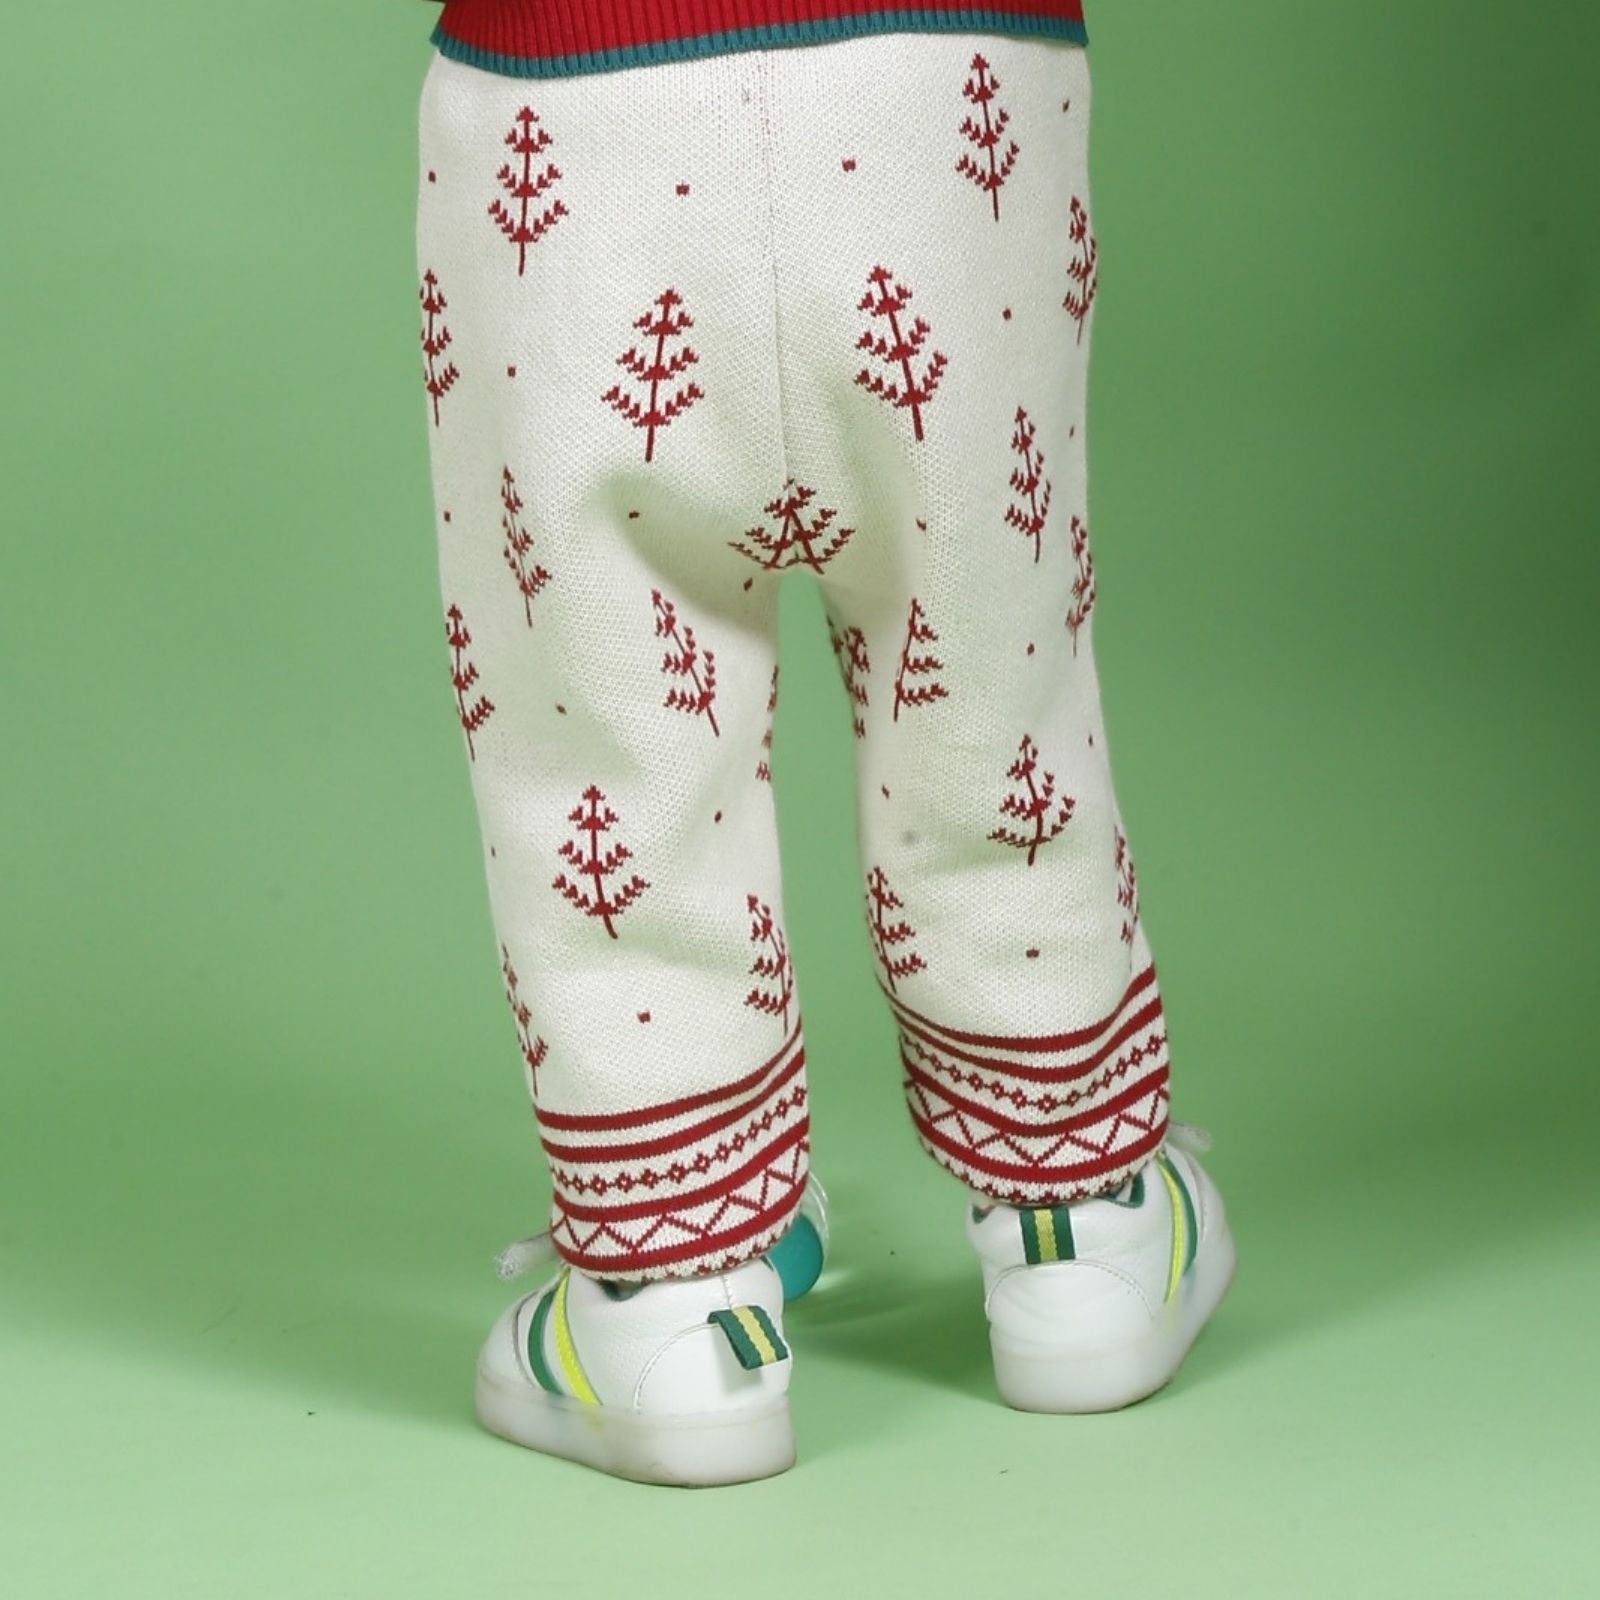 Greendeer Santa & Jaunty Reindeer 100% Cotton Sweater with Lower Set of 4